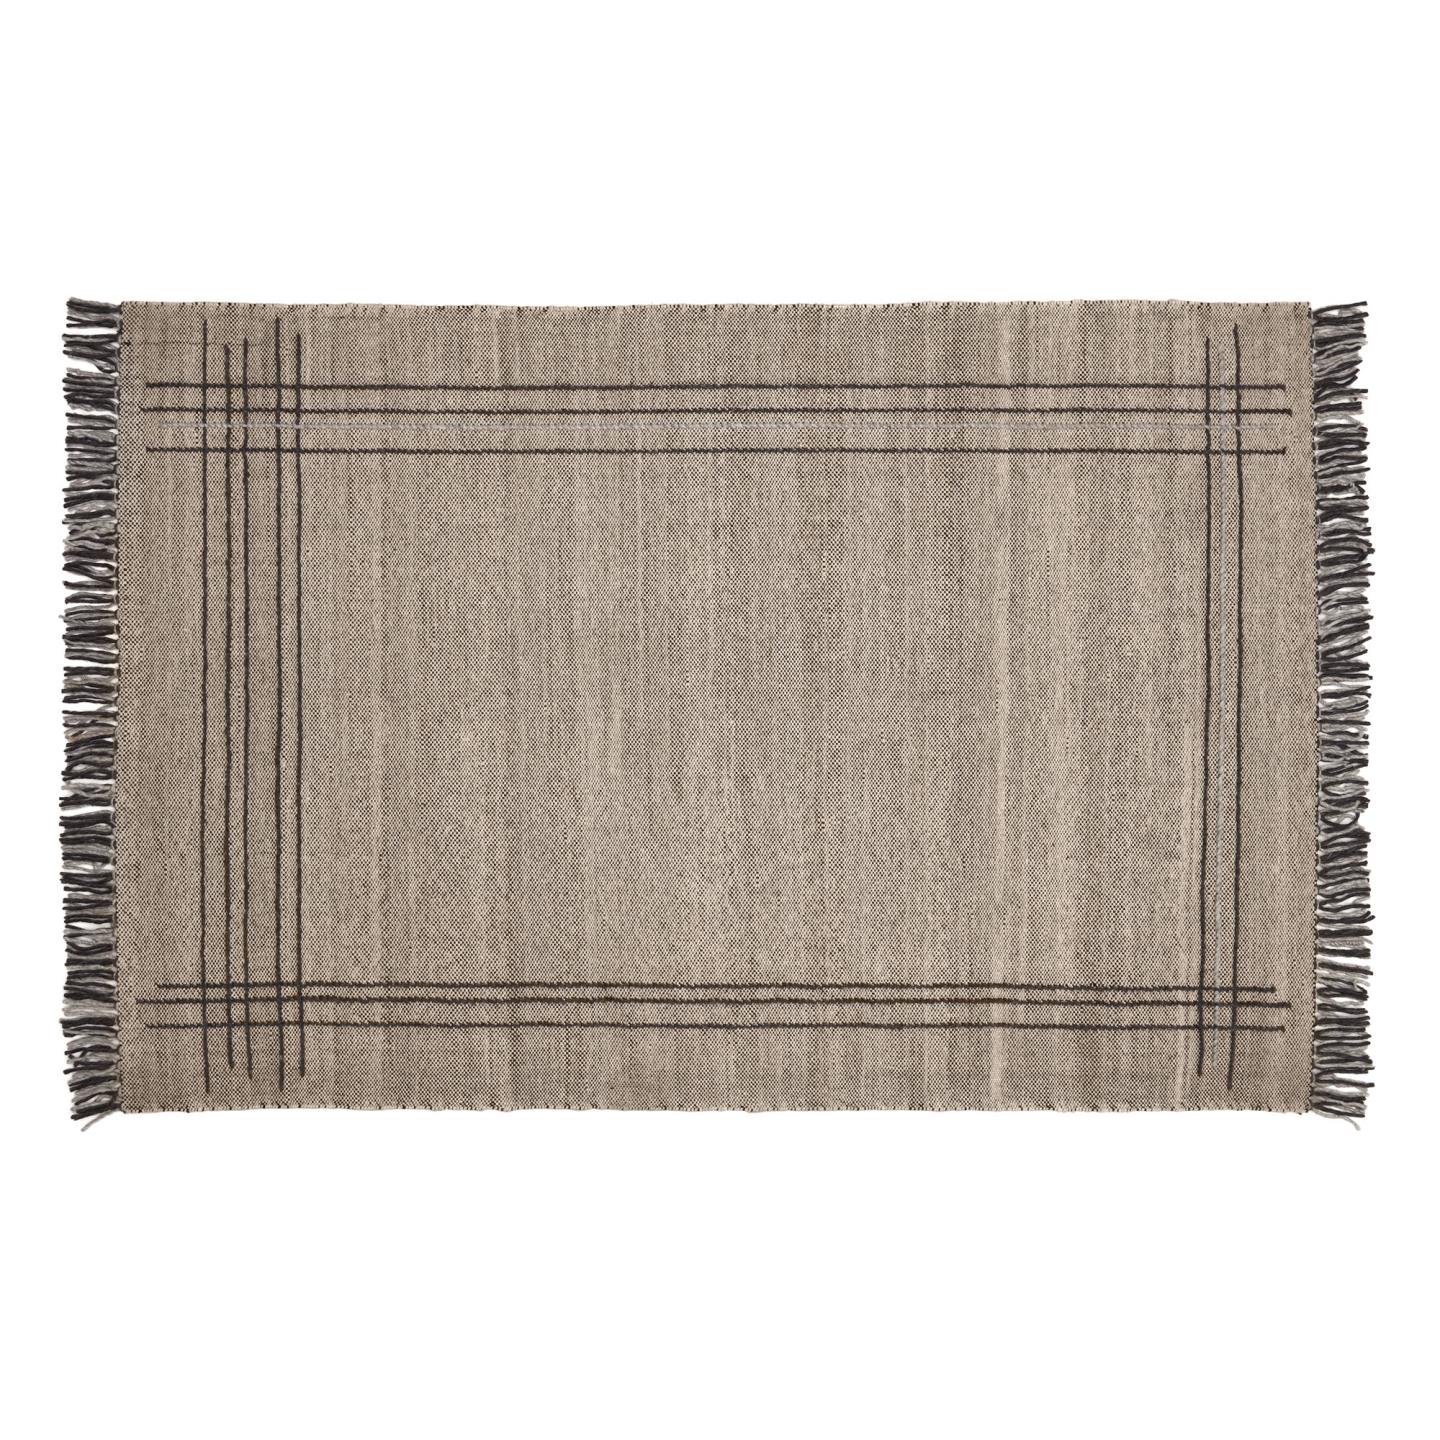 LAFORMA Eneo gulvtæppe, m. kvaster, rektangulær - brun uld/bomuld/polyester (160x230)